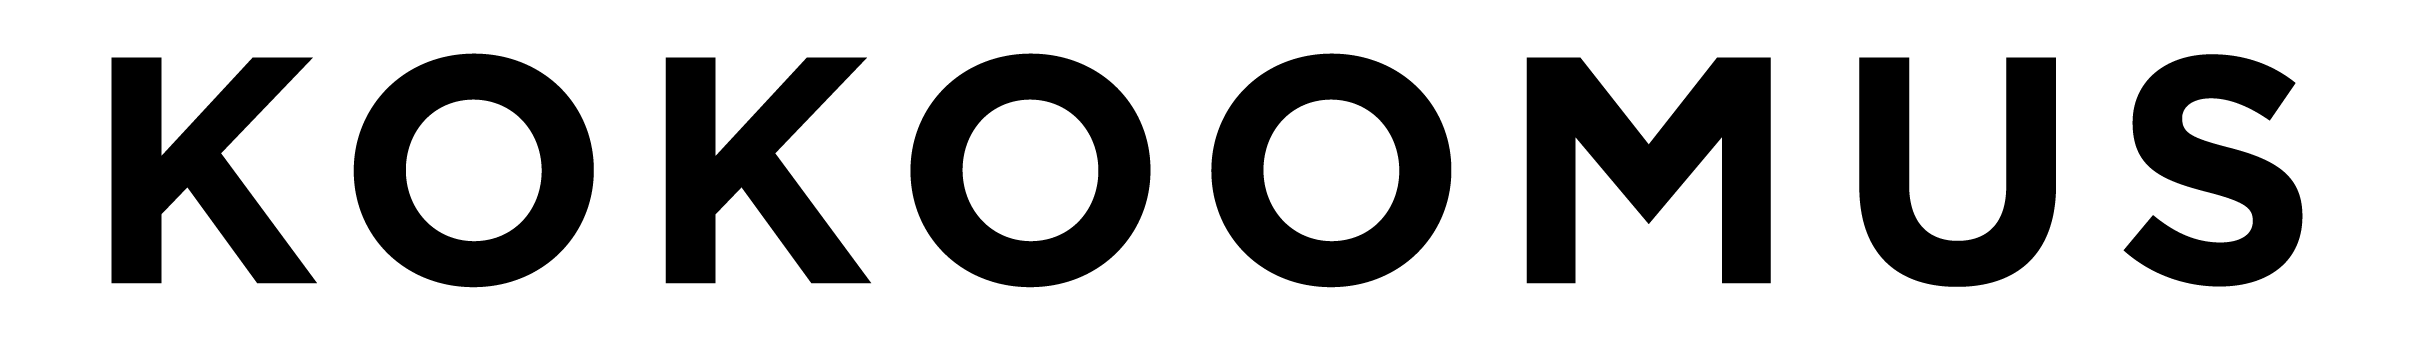 Kokoomus logo